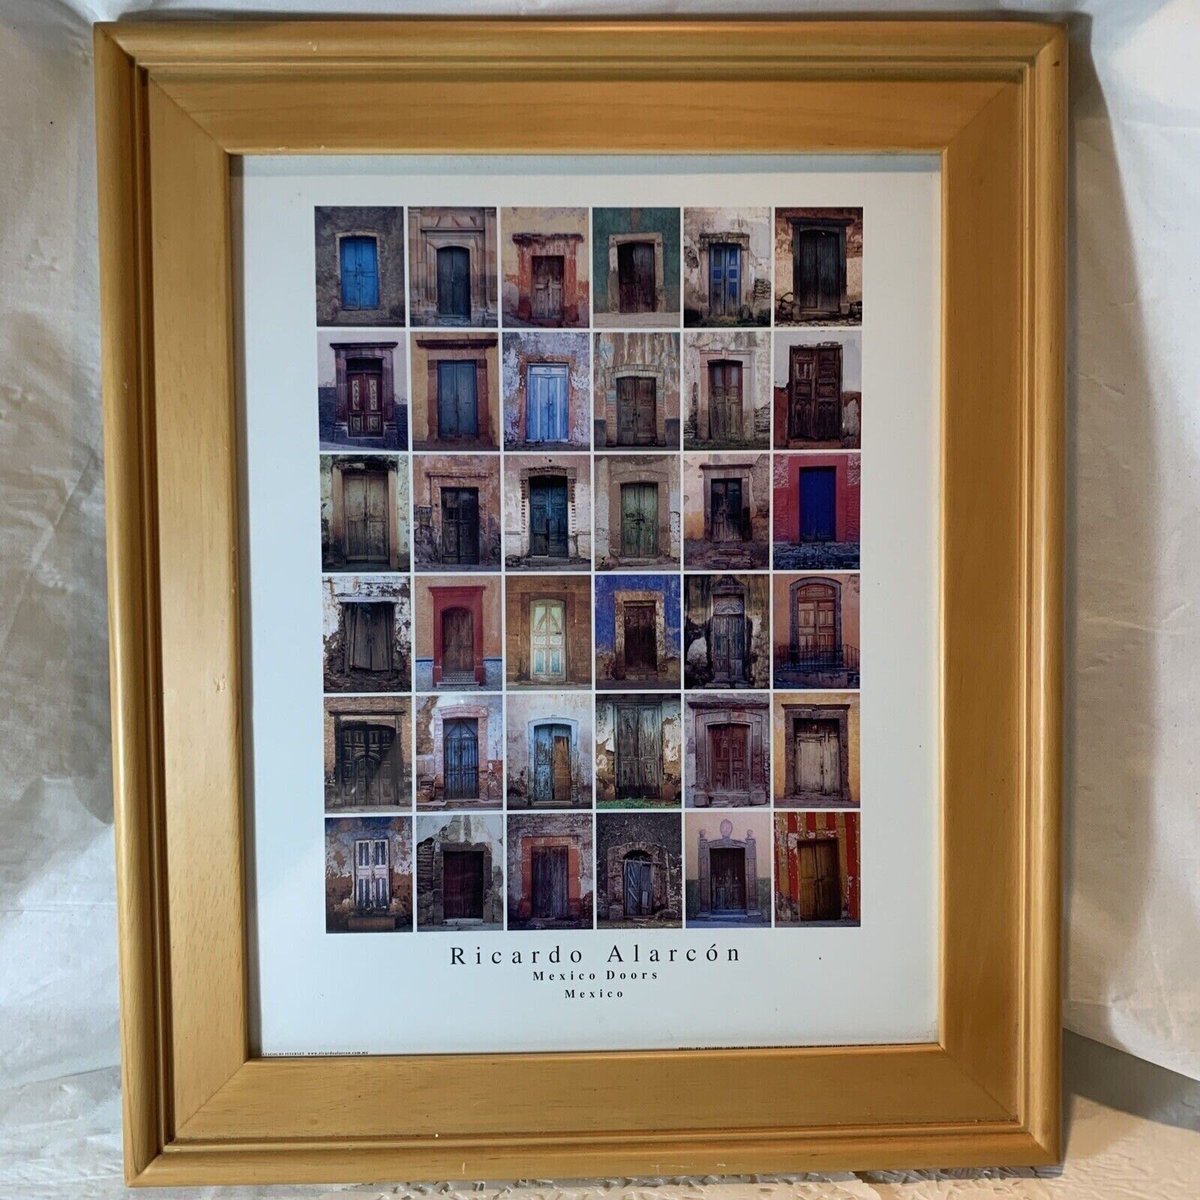 Wood Framed Photo Print By Ricard Alarcon “Mexico Doors” 

#framedart #photo #homedecor #wallart